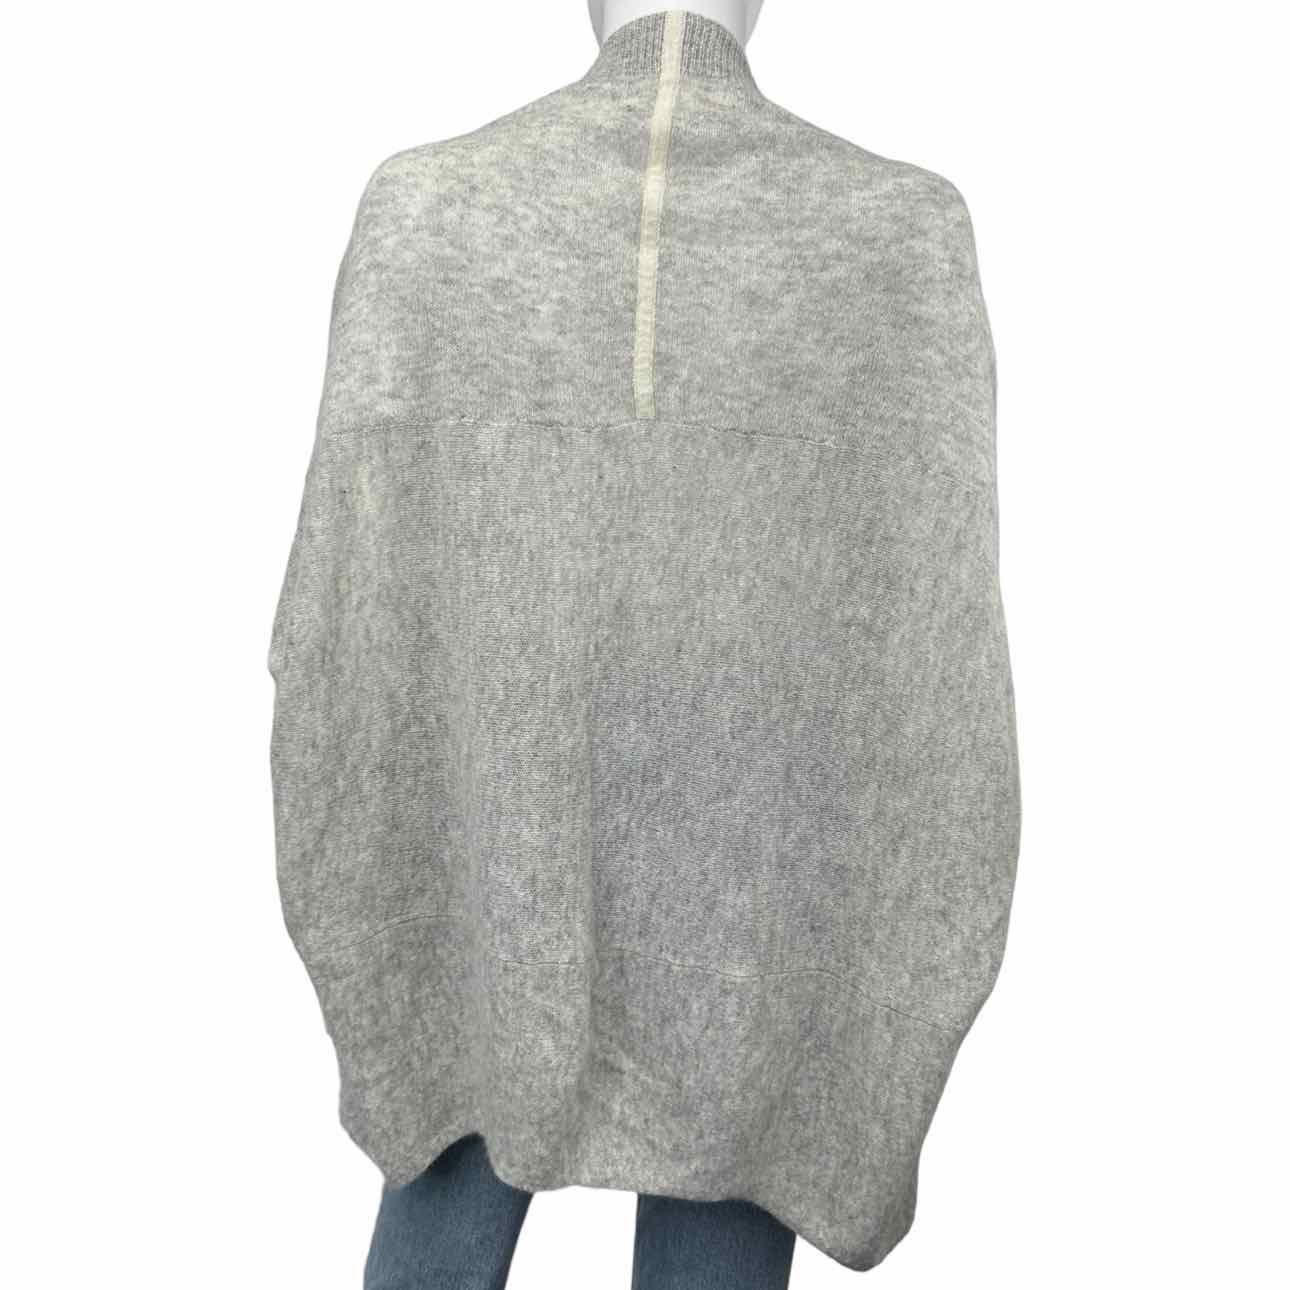 Versatile transitional season cashmere sweater poncho cardigan ￼